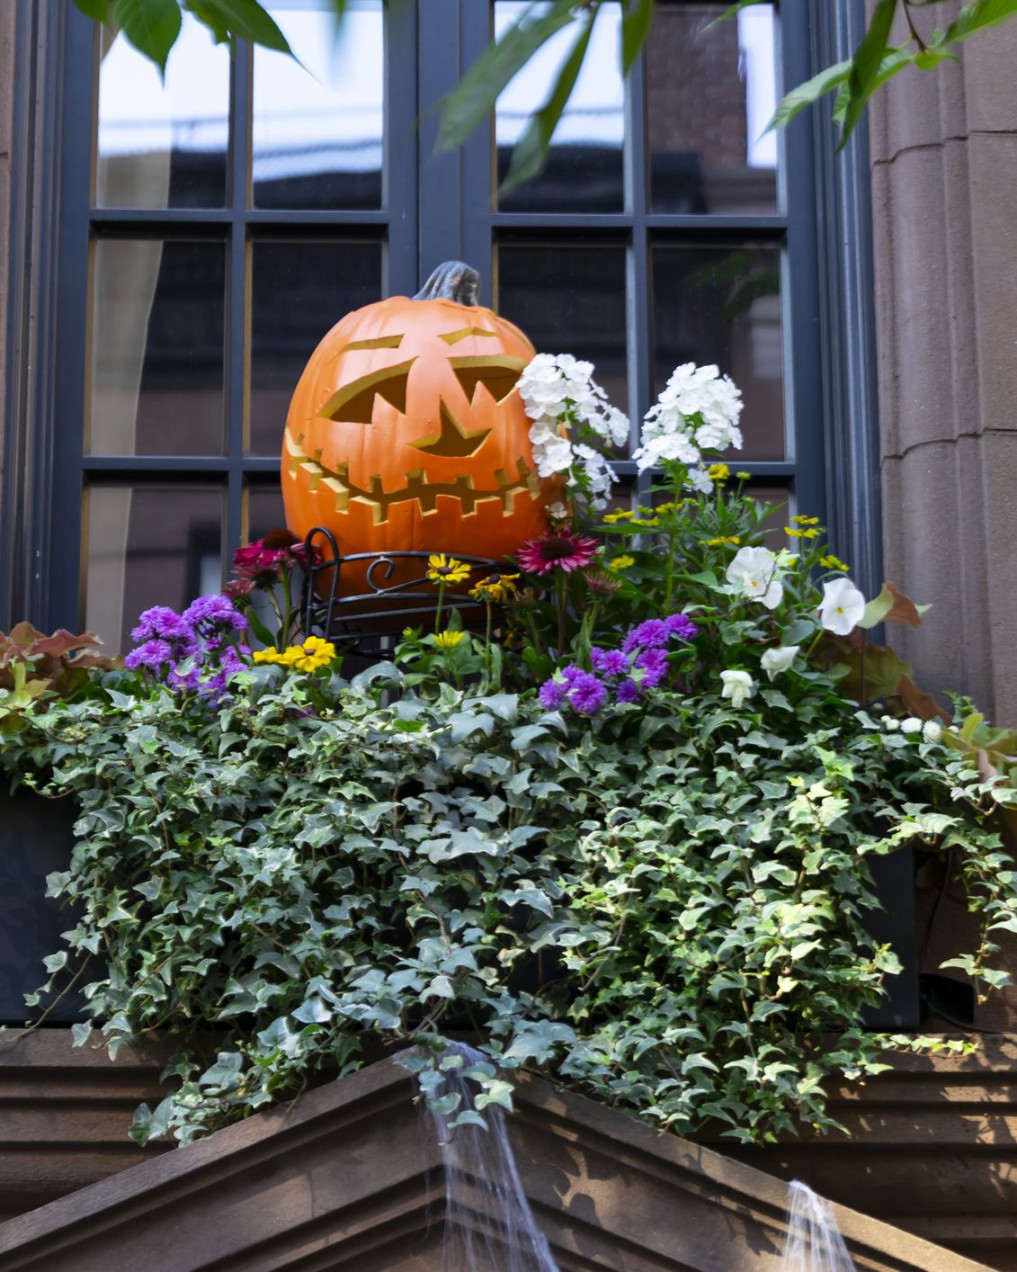 Best Outdoor Halloween Decorations to Try in